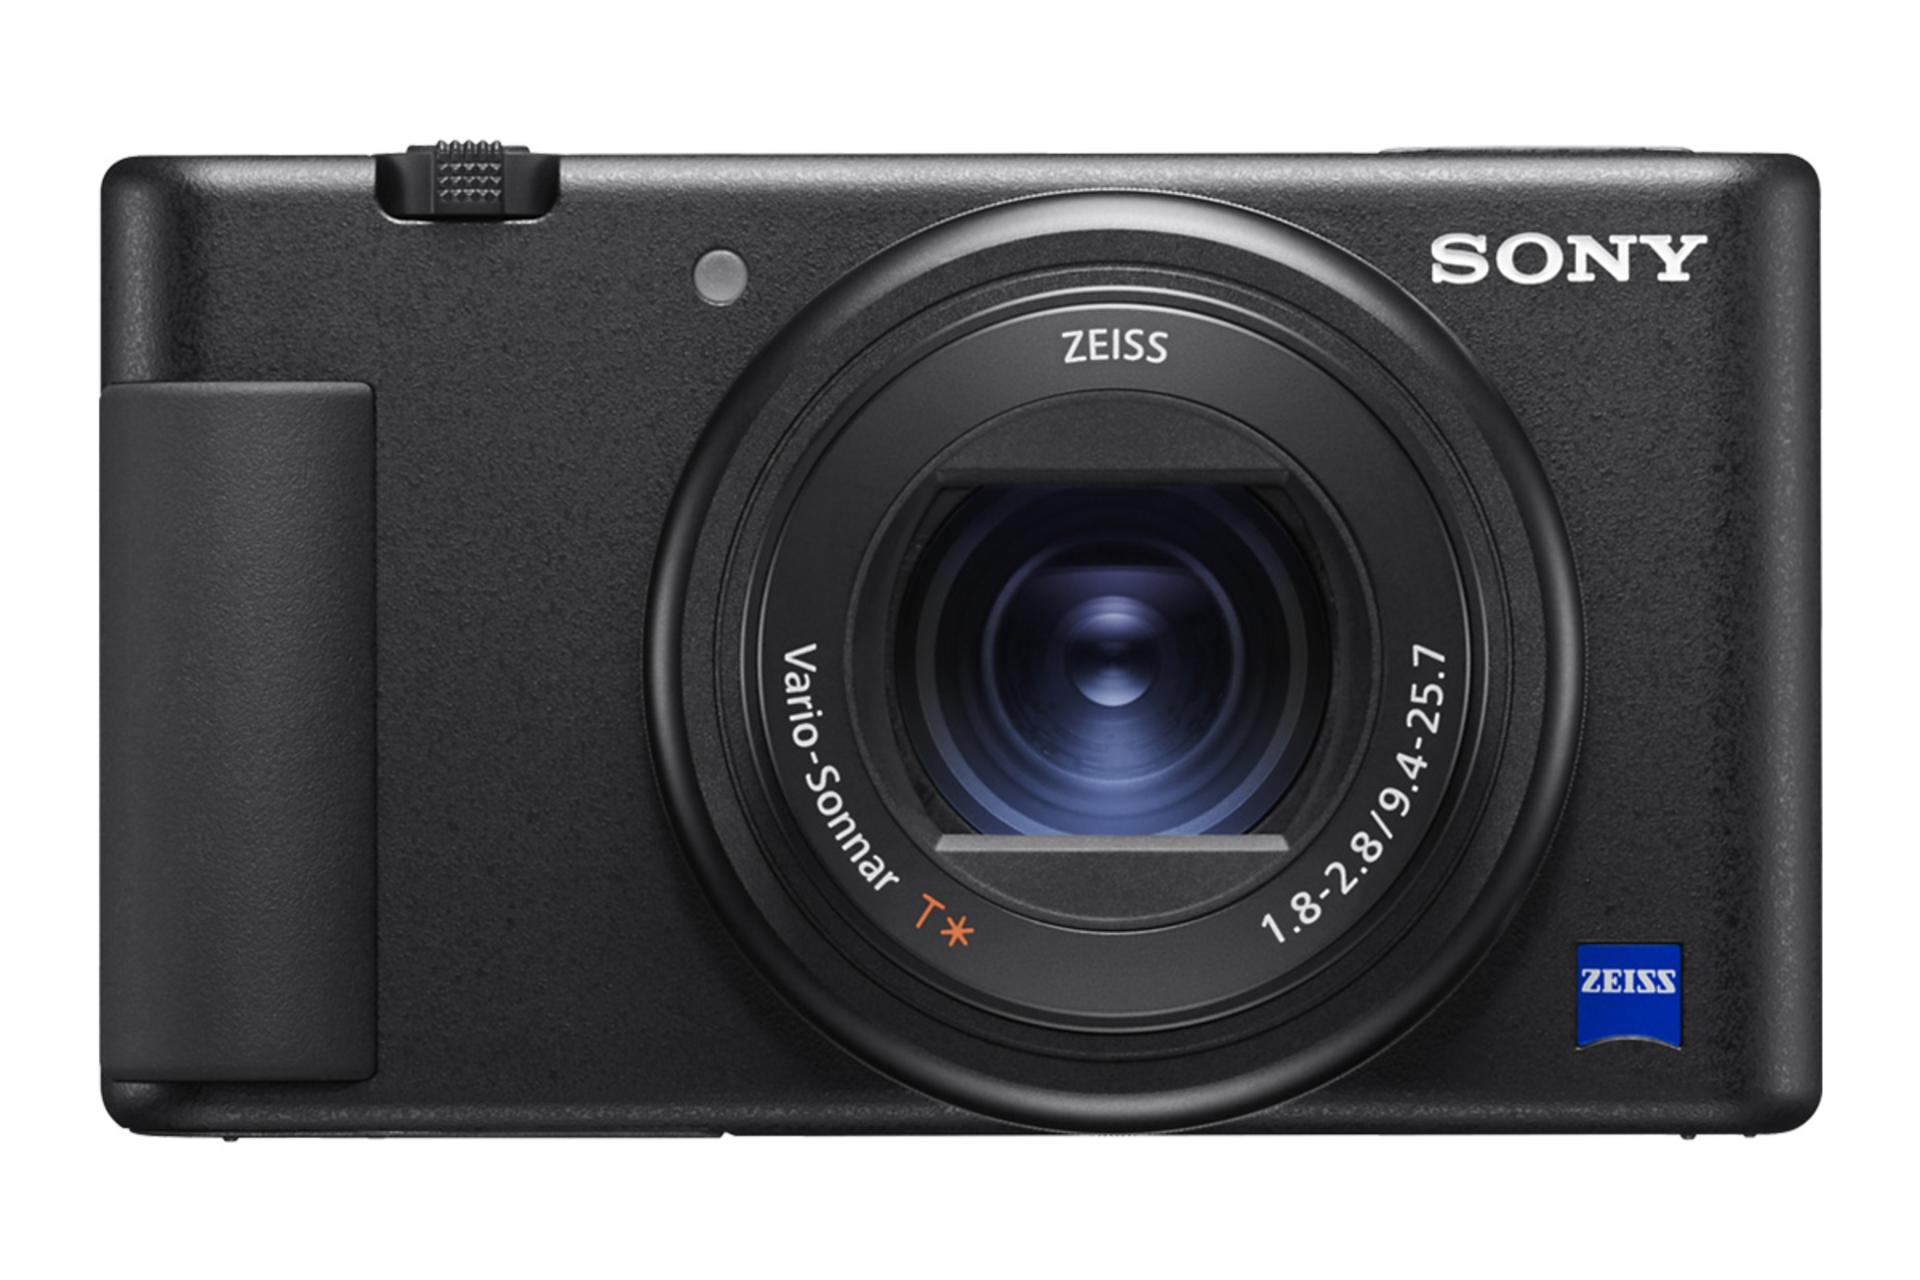  Sony ZV-1 / دوربین سونی سونی ZV-1 / نمای جلو / رنگ مشکی